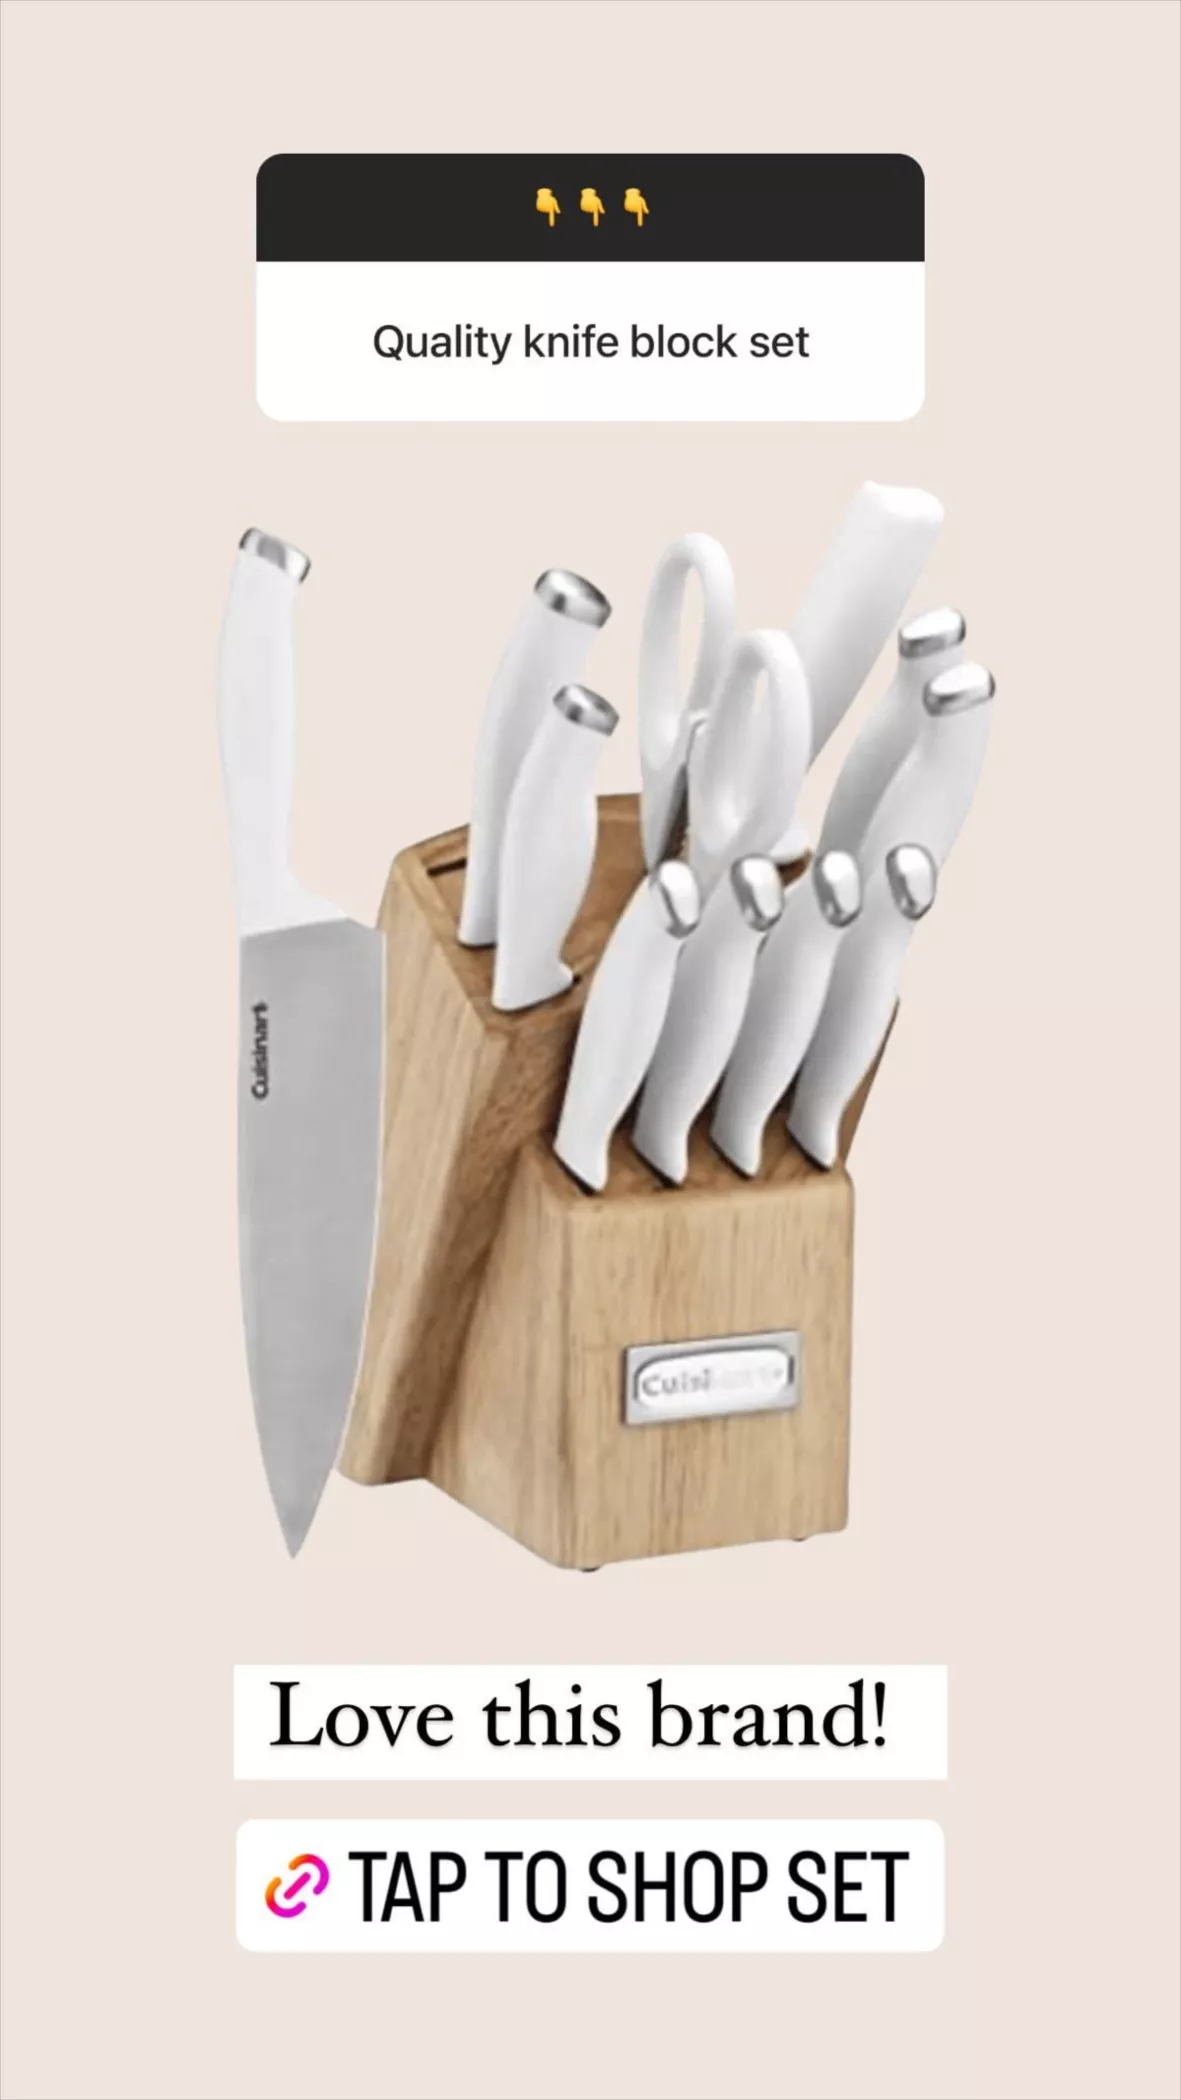 Cuisinart Color Pro Collection 12-Piece Block Cutlery Set - White